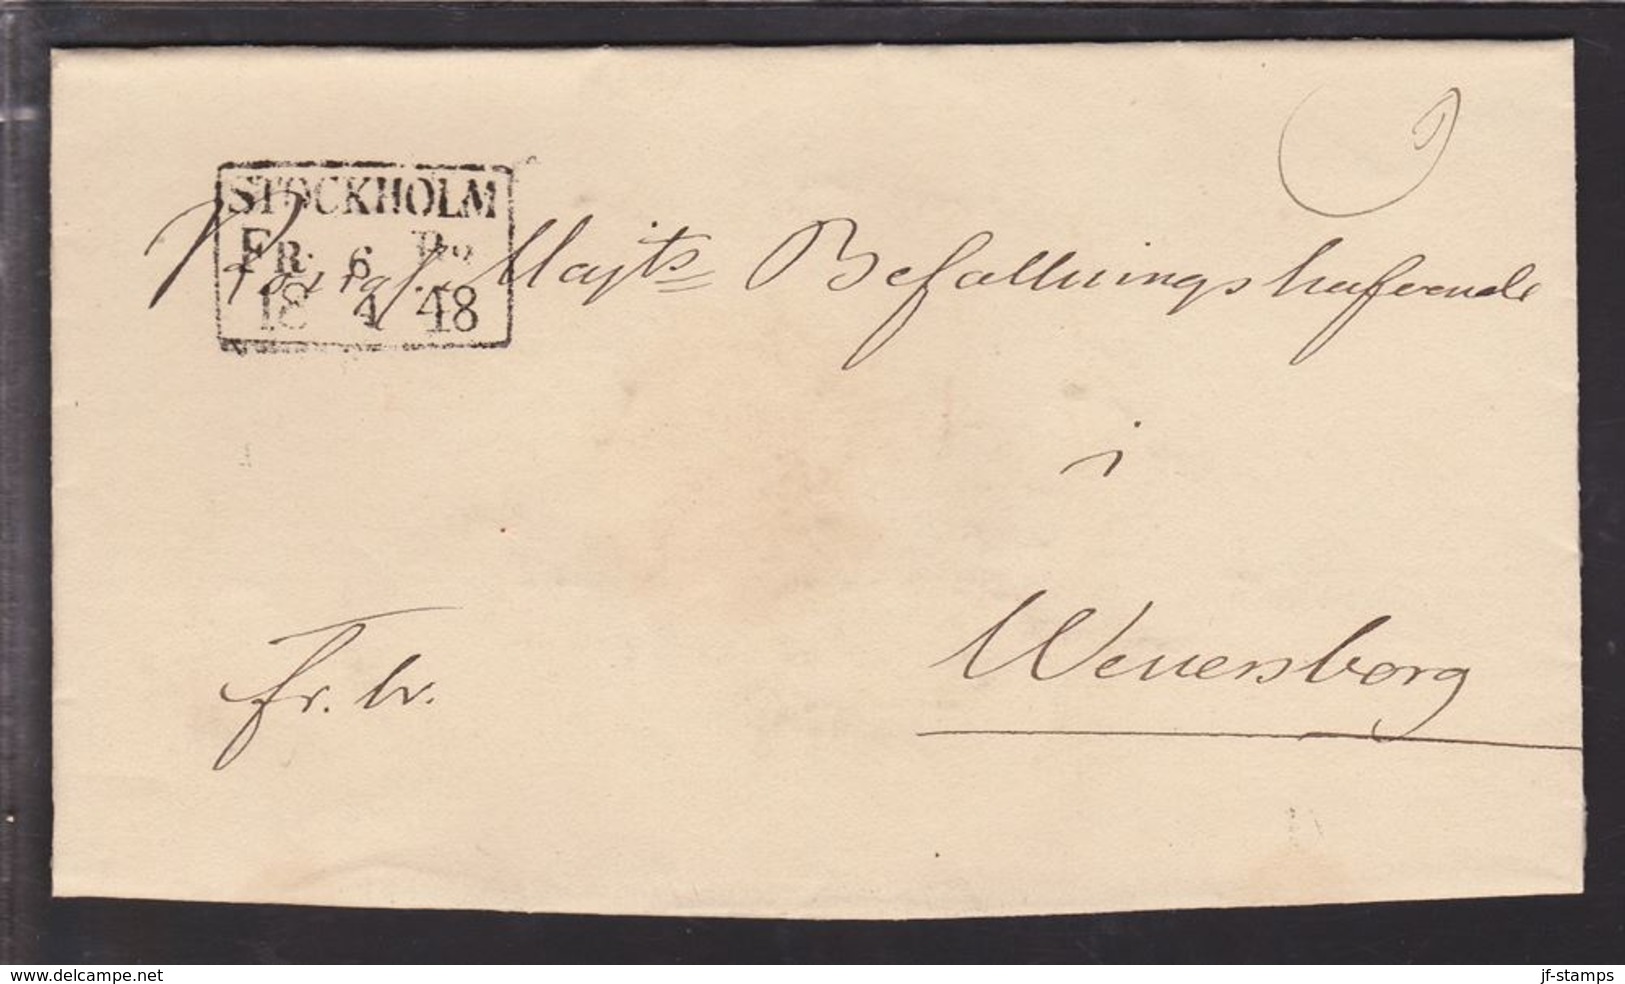 1847. SVERIGE. STOCKHOLM  FR BR 6 4 1848. To Wenersborg. () - JF111049 - Prefilatelia